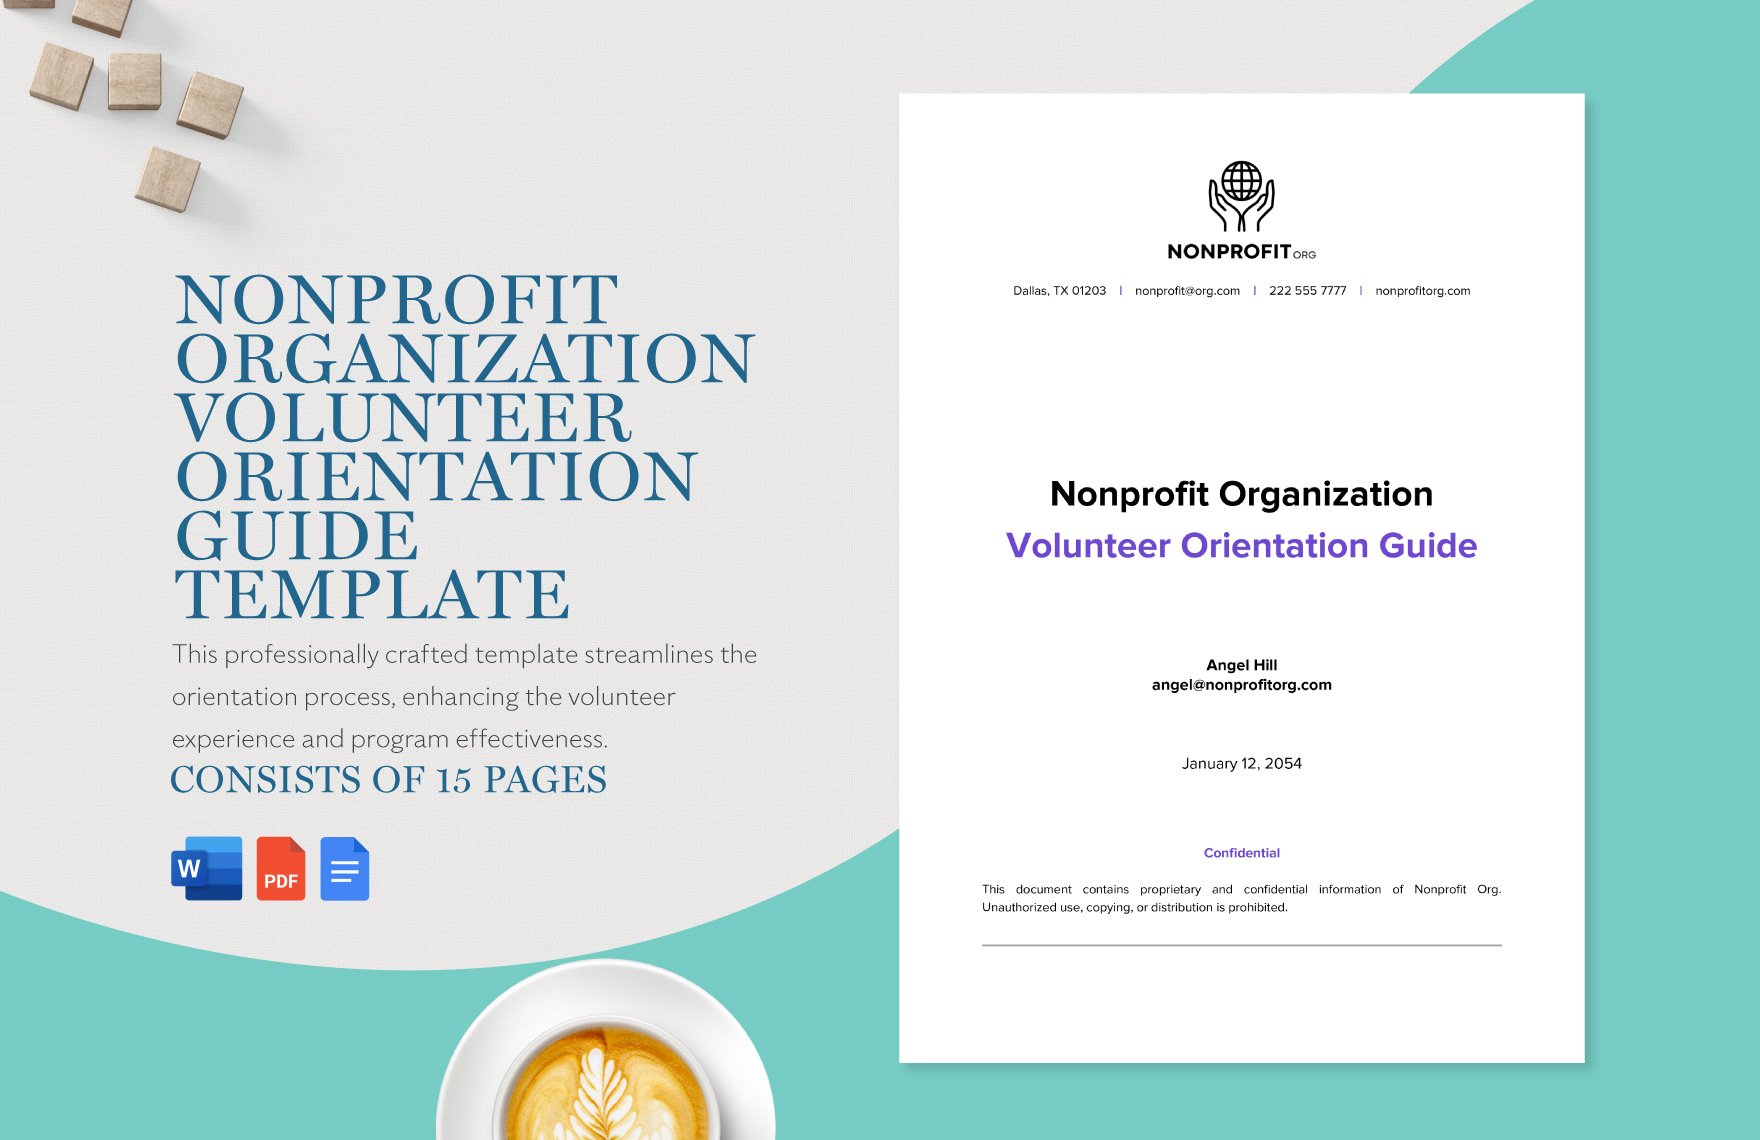 Nonprofit Organization Volunteer Orientation Guide Template in Word, Google Docs, PDF